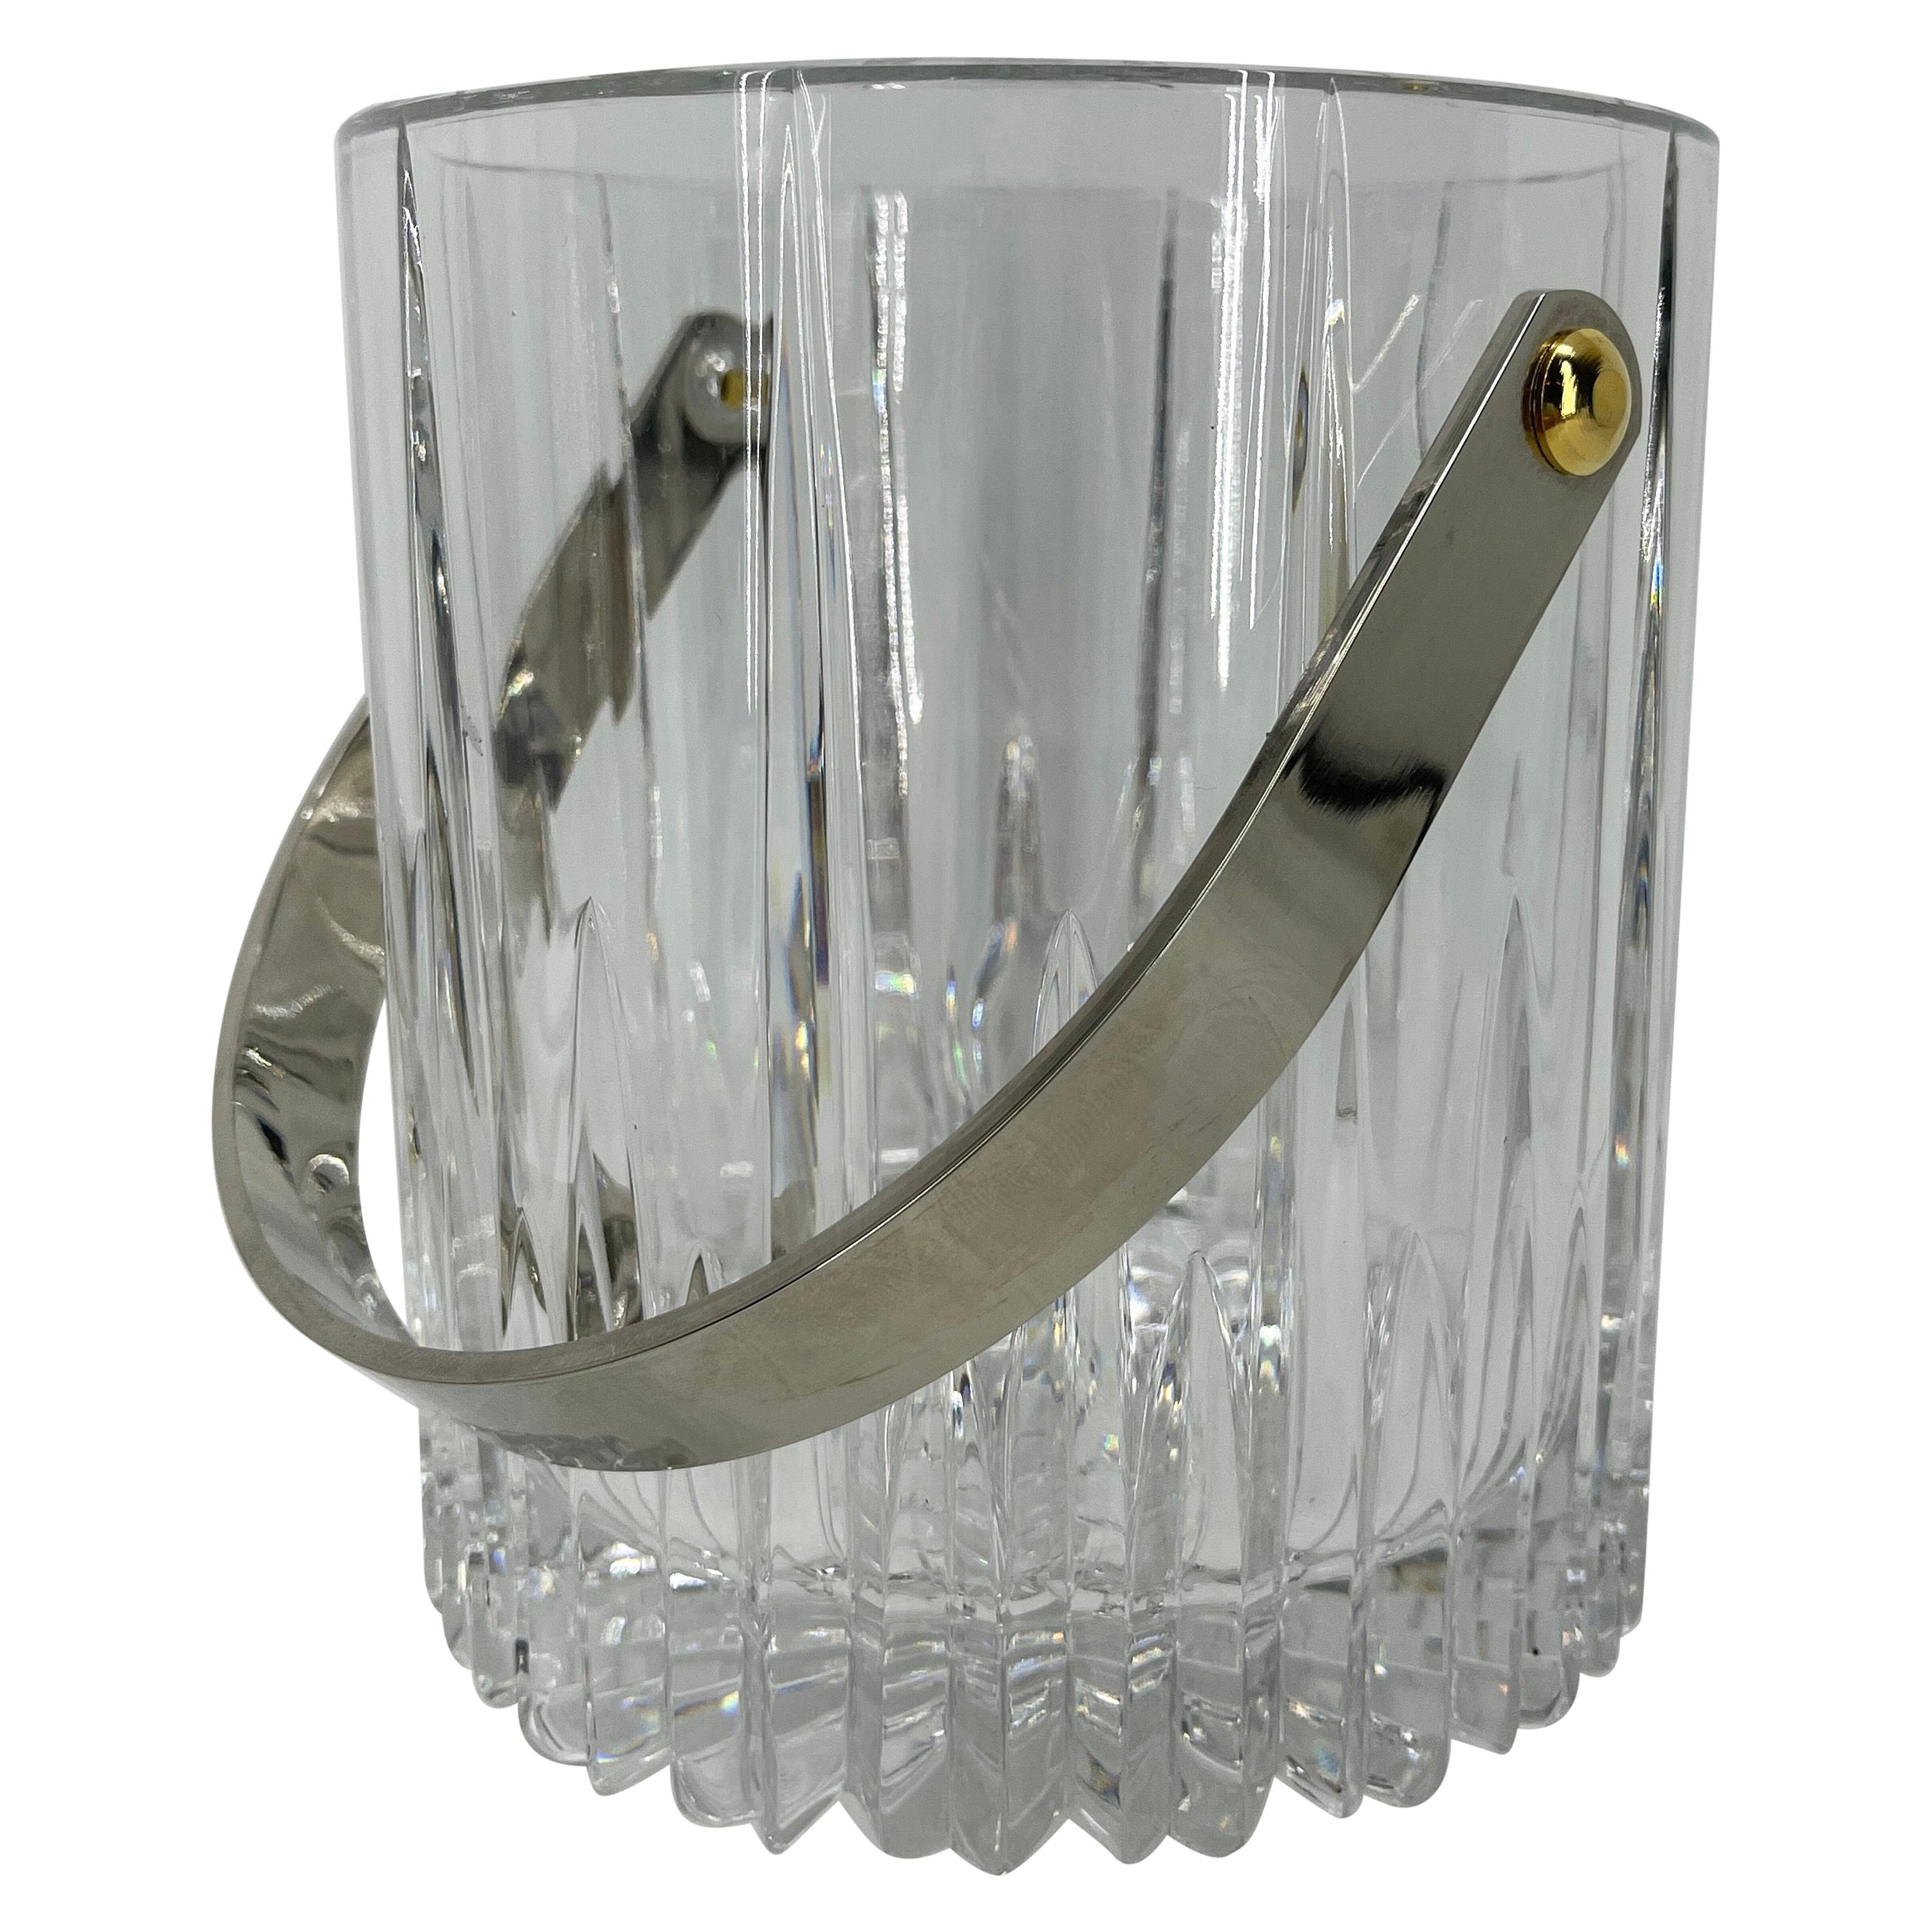 Vintage Cut Crystal Ice Bucket with Polished Chrome Handle